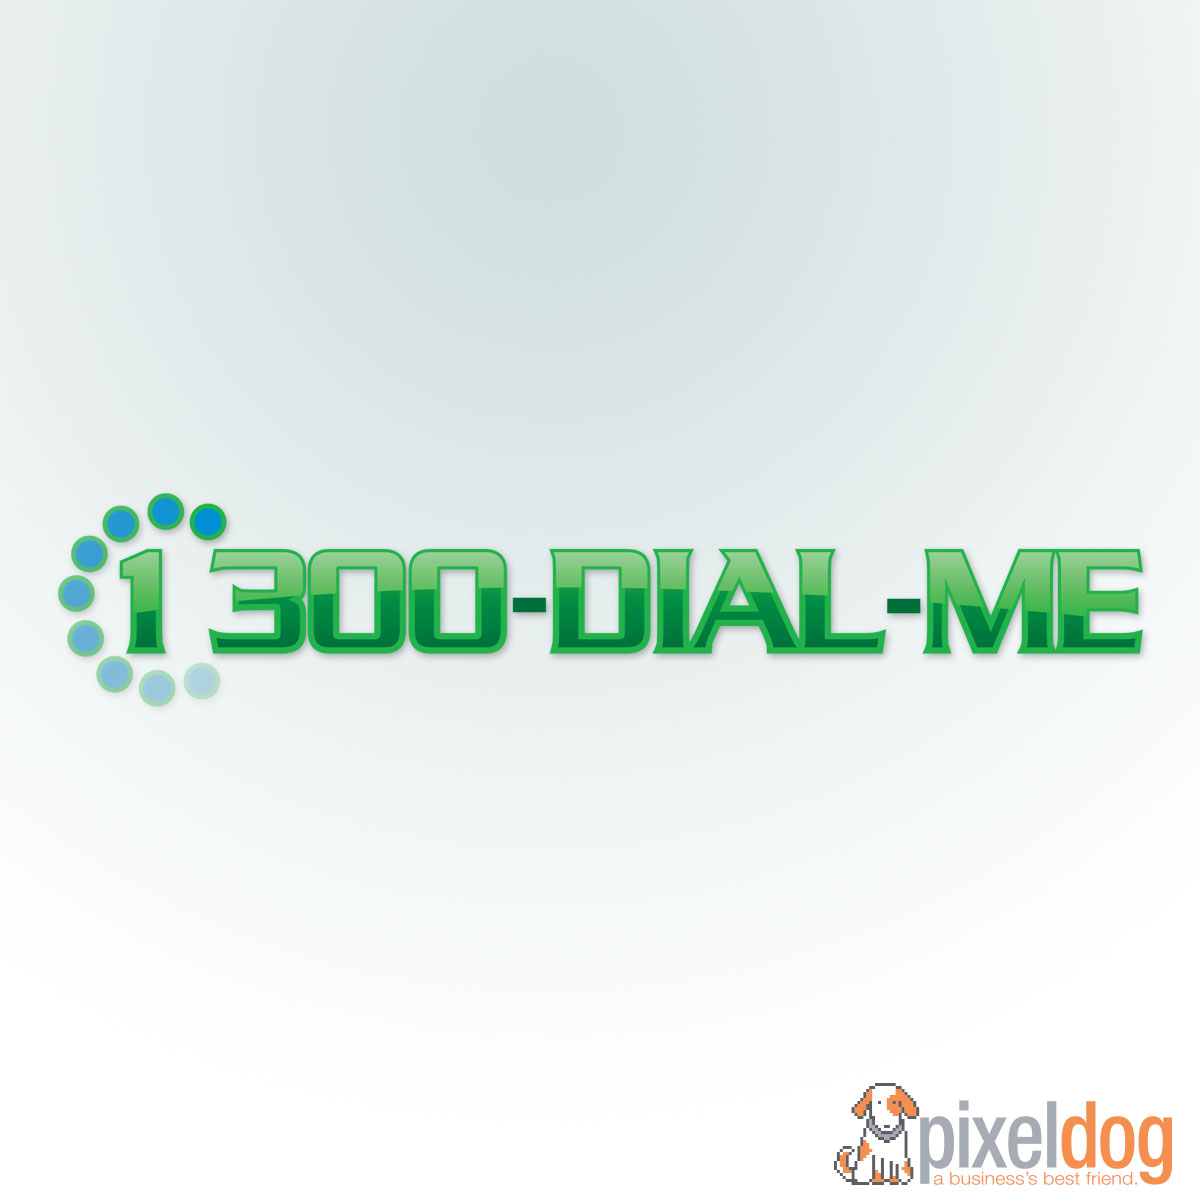 1 300-Dial-Me (Company)